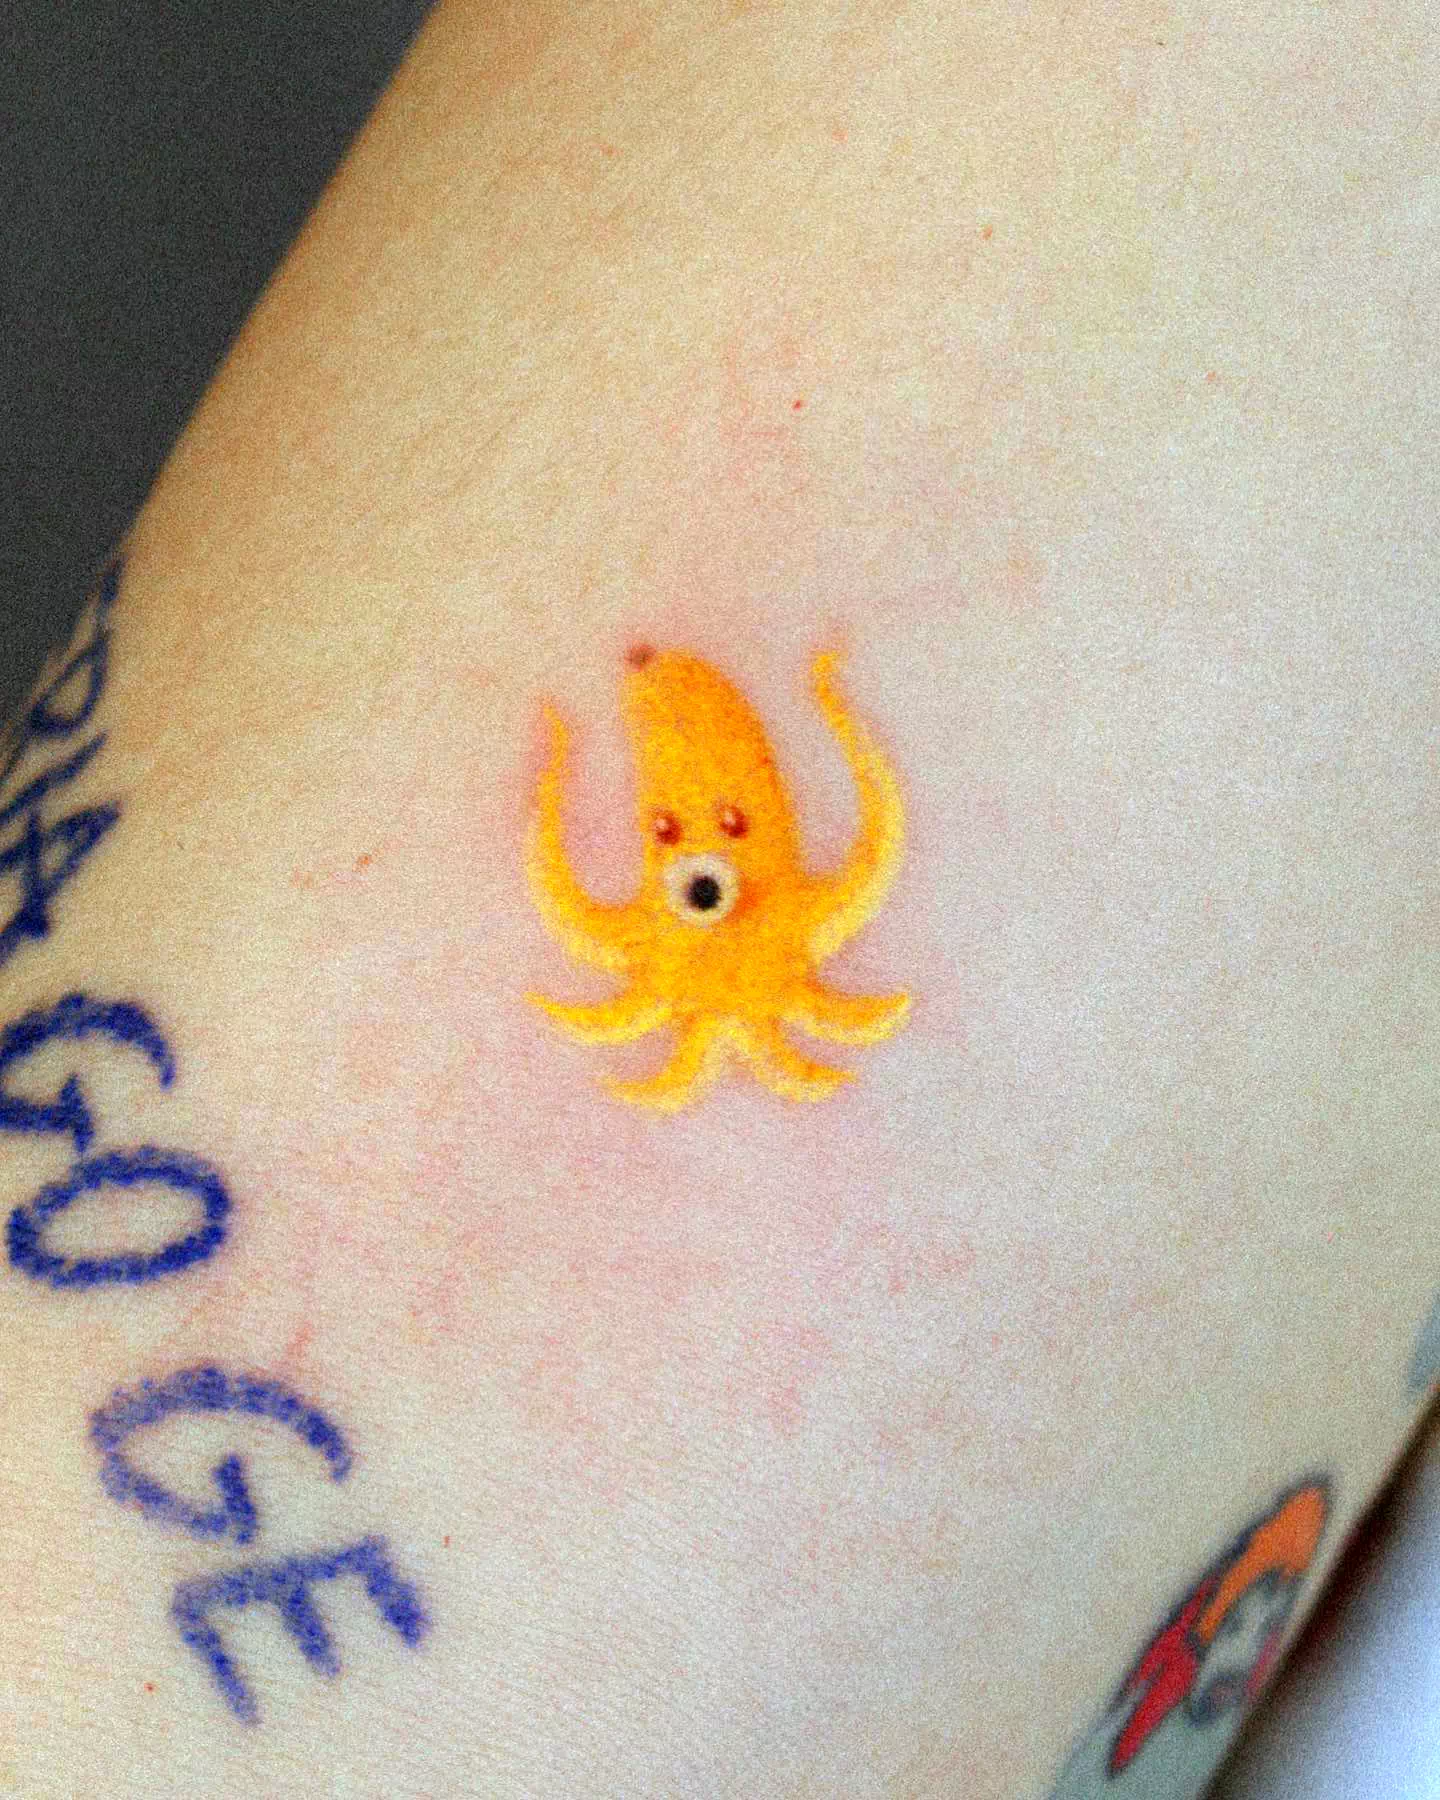 Watercolor Octopus Tattoo 1